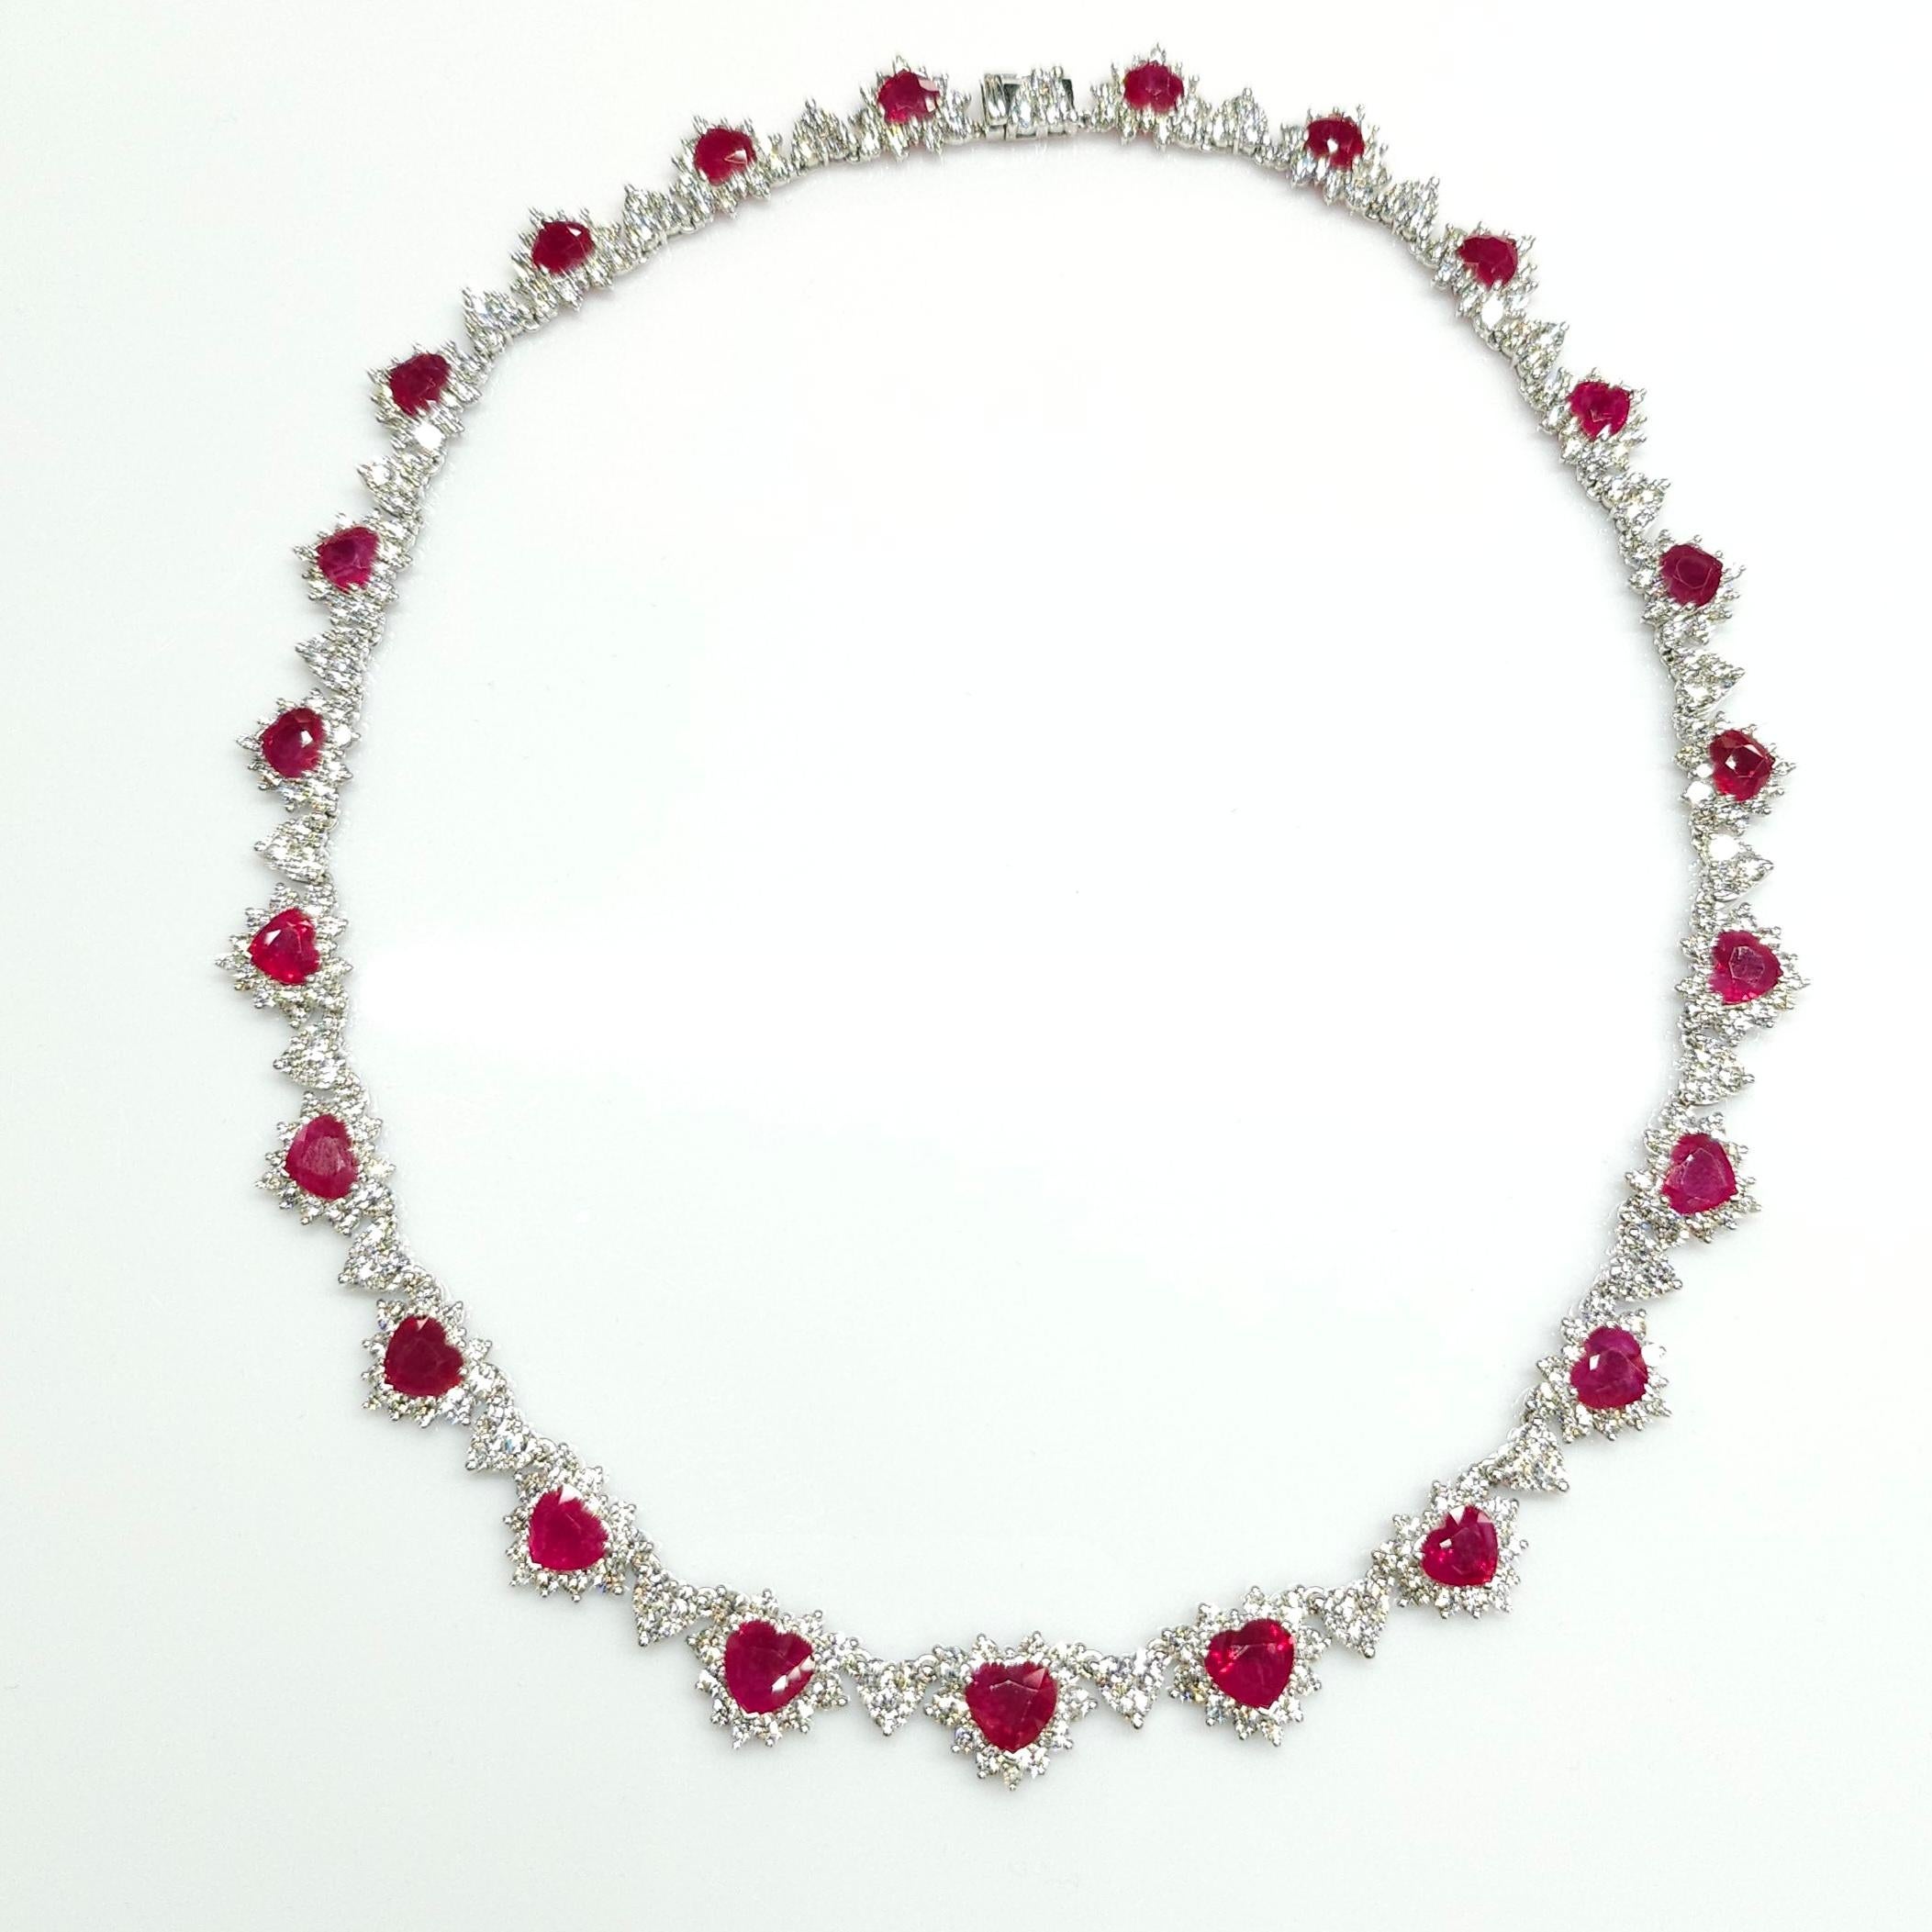 IGI Certified 26.58 Carat Burma Ruby & 18.85 Carat Diamond Necklace in 18K Gold For Sale 3